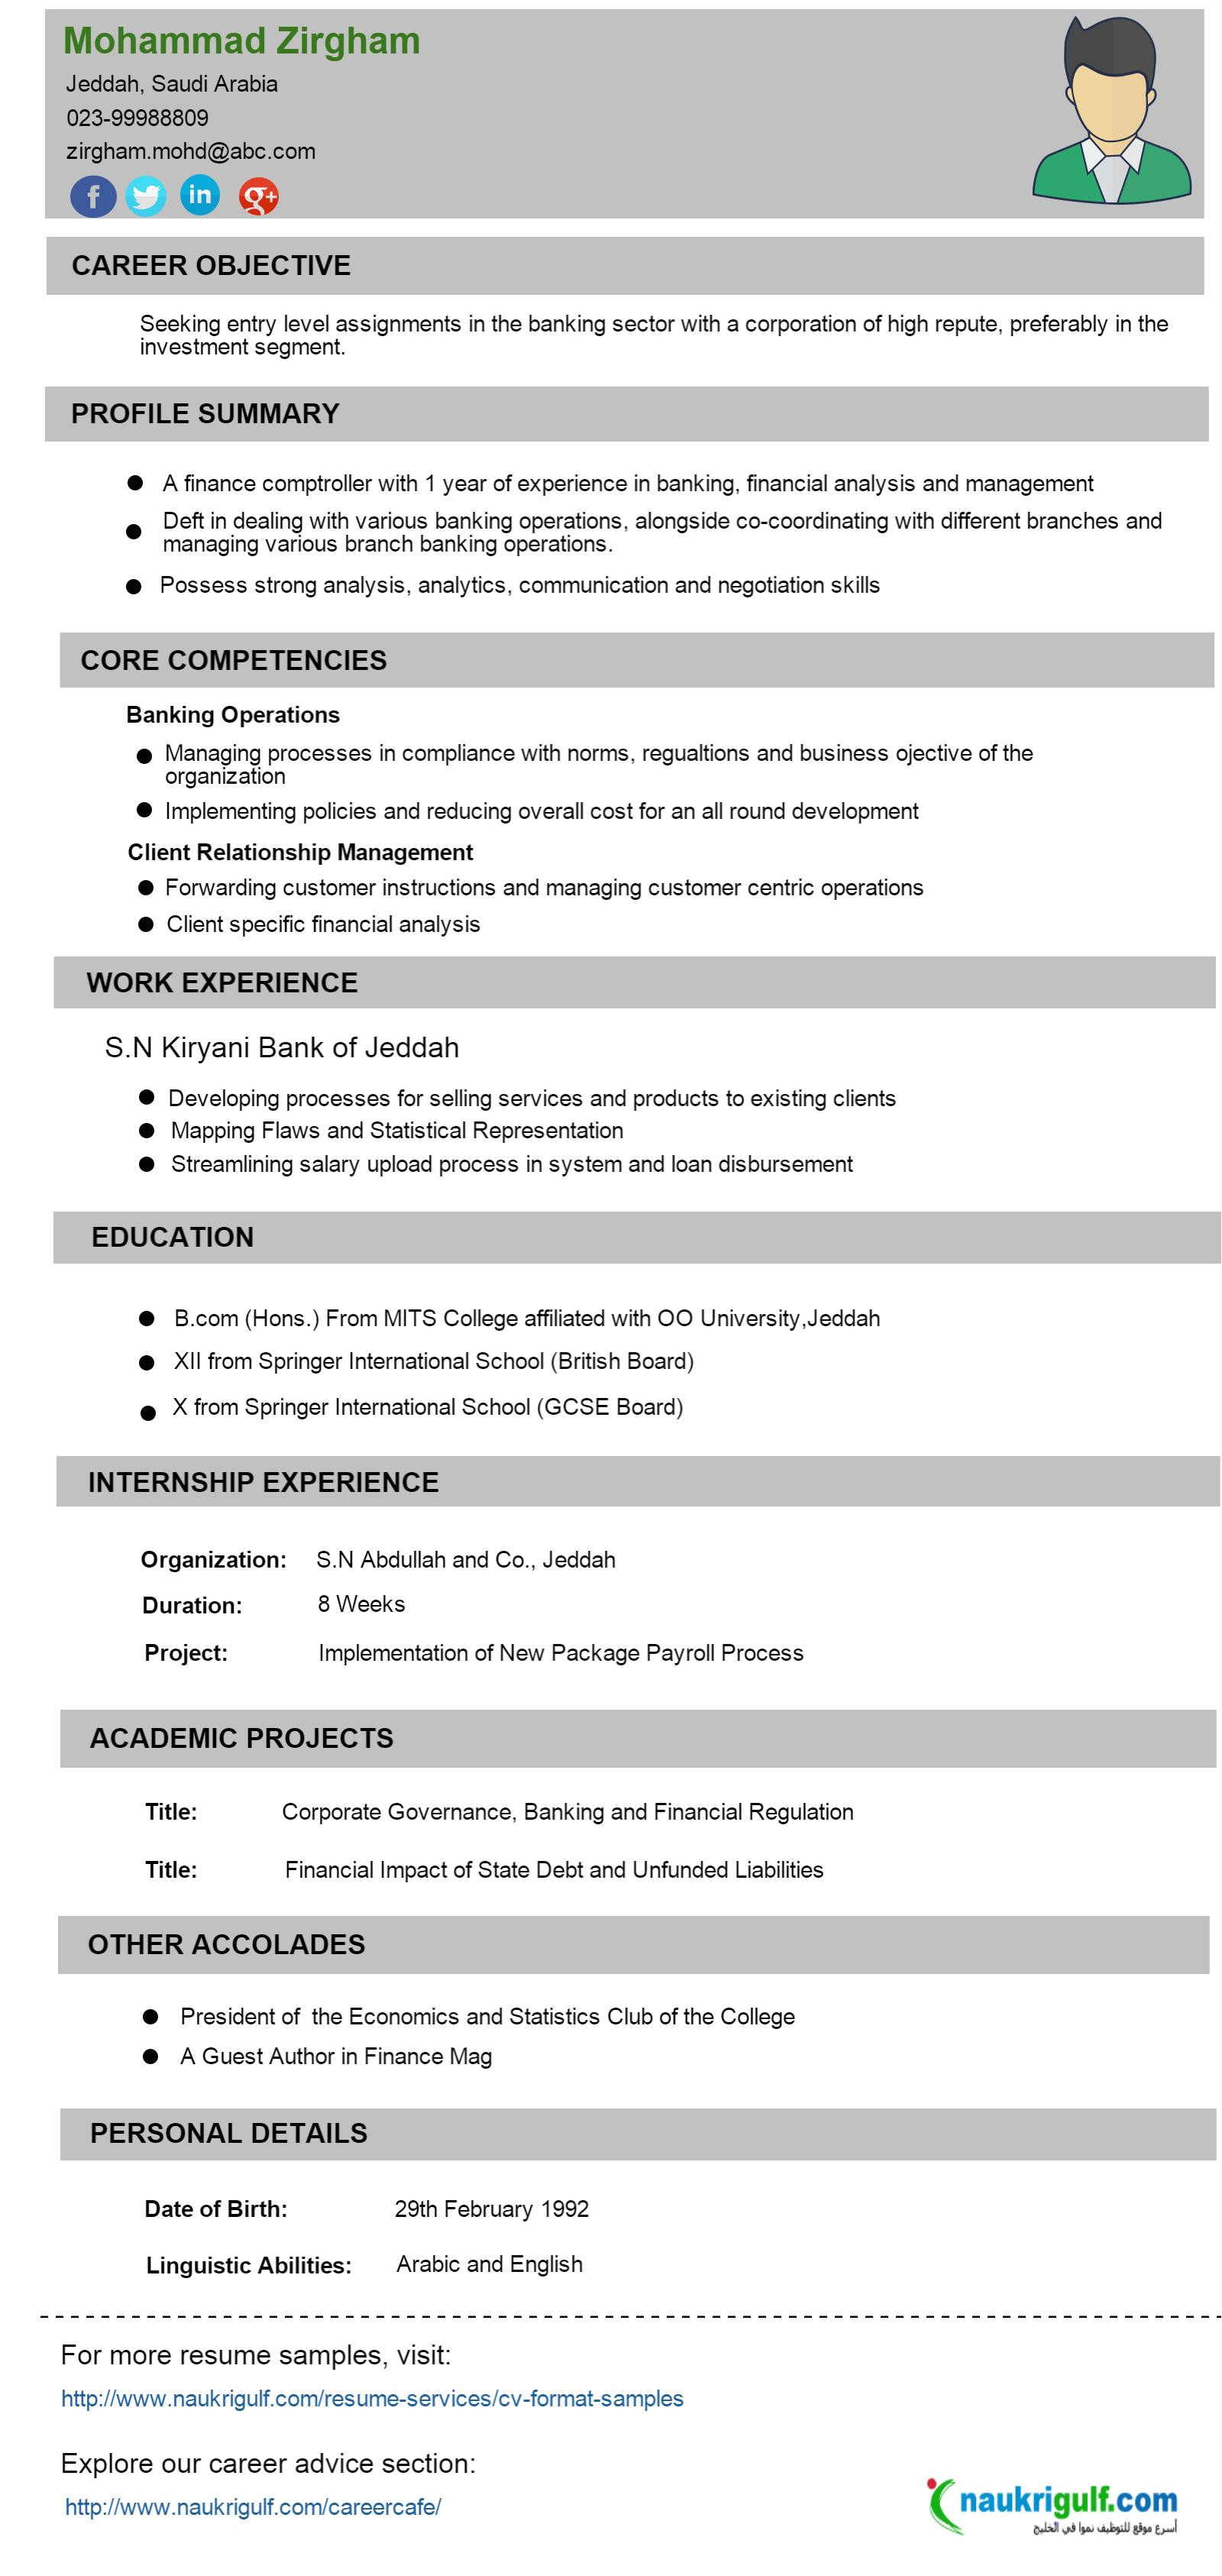 resume format for banking finance job